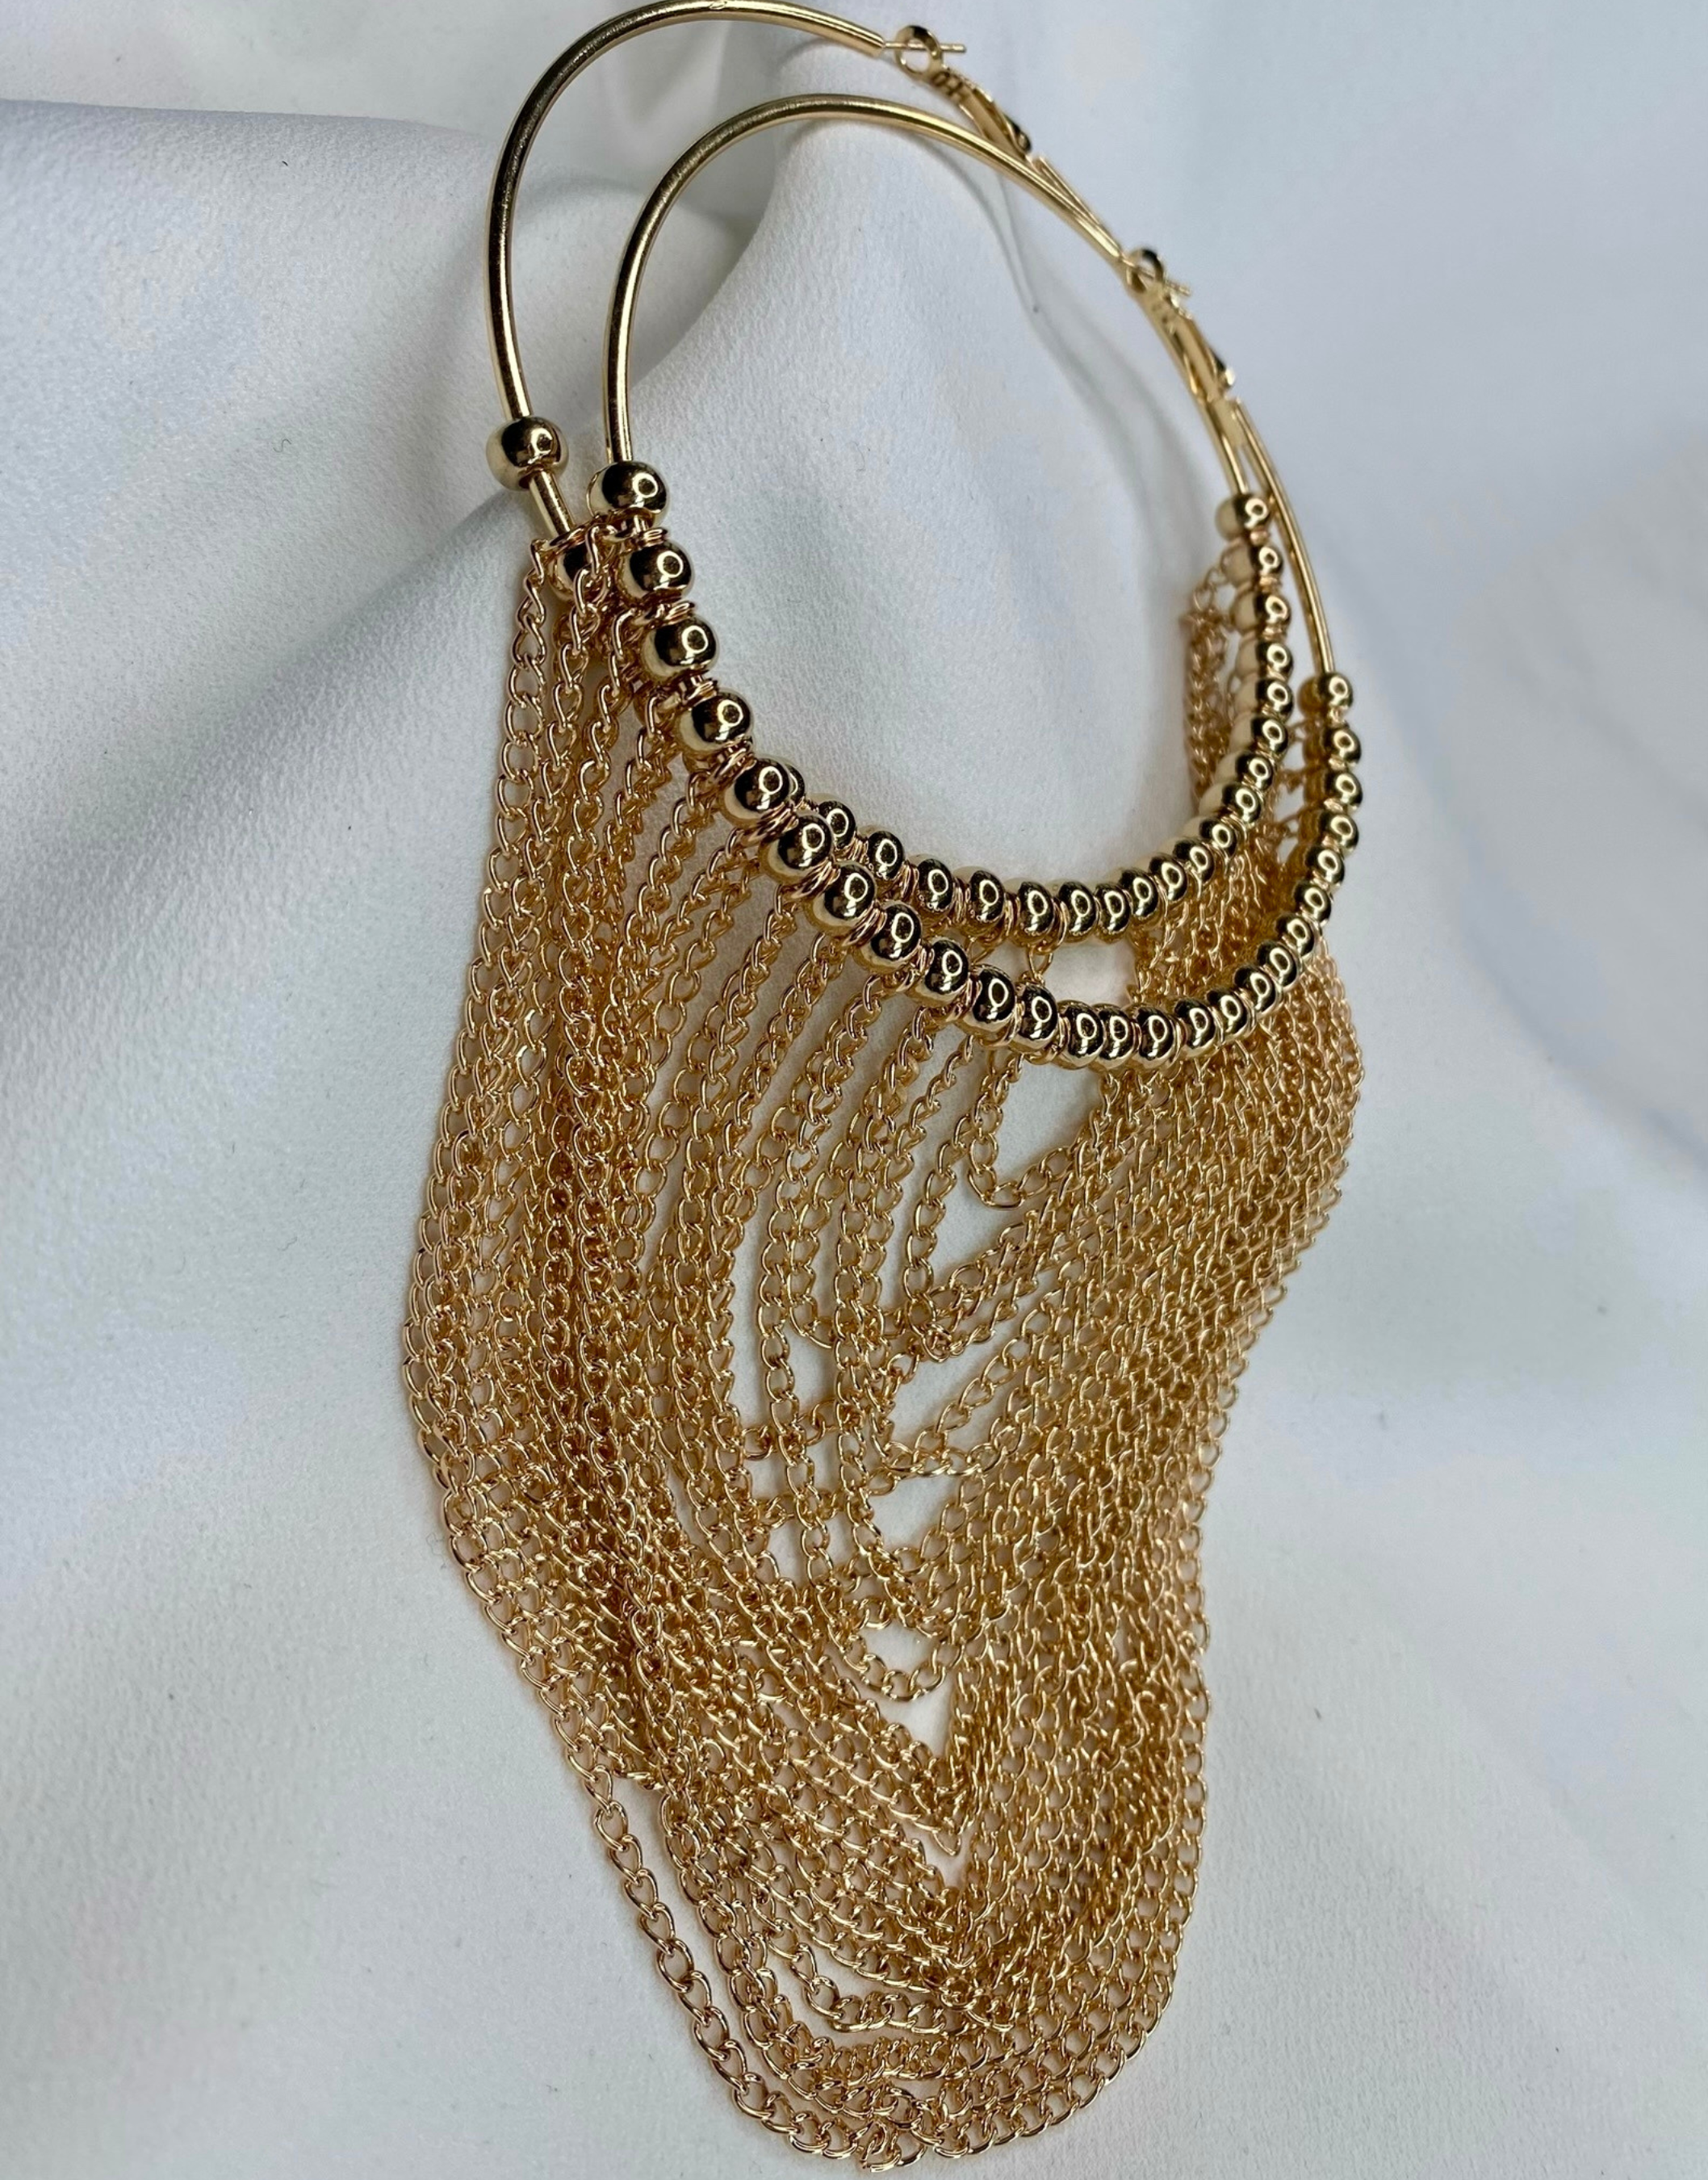 ROSETTA Gold Beaded Hoop Earrings